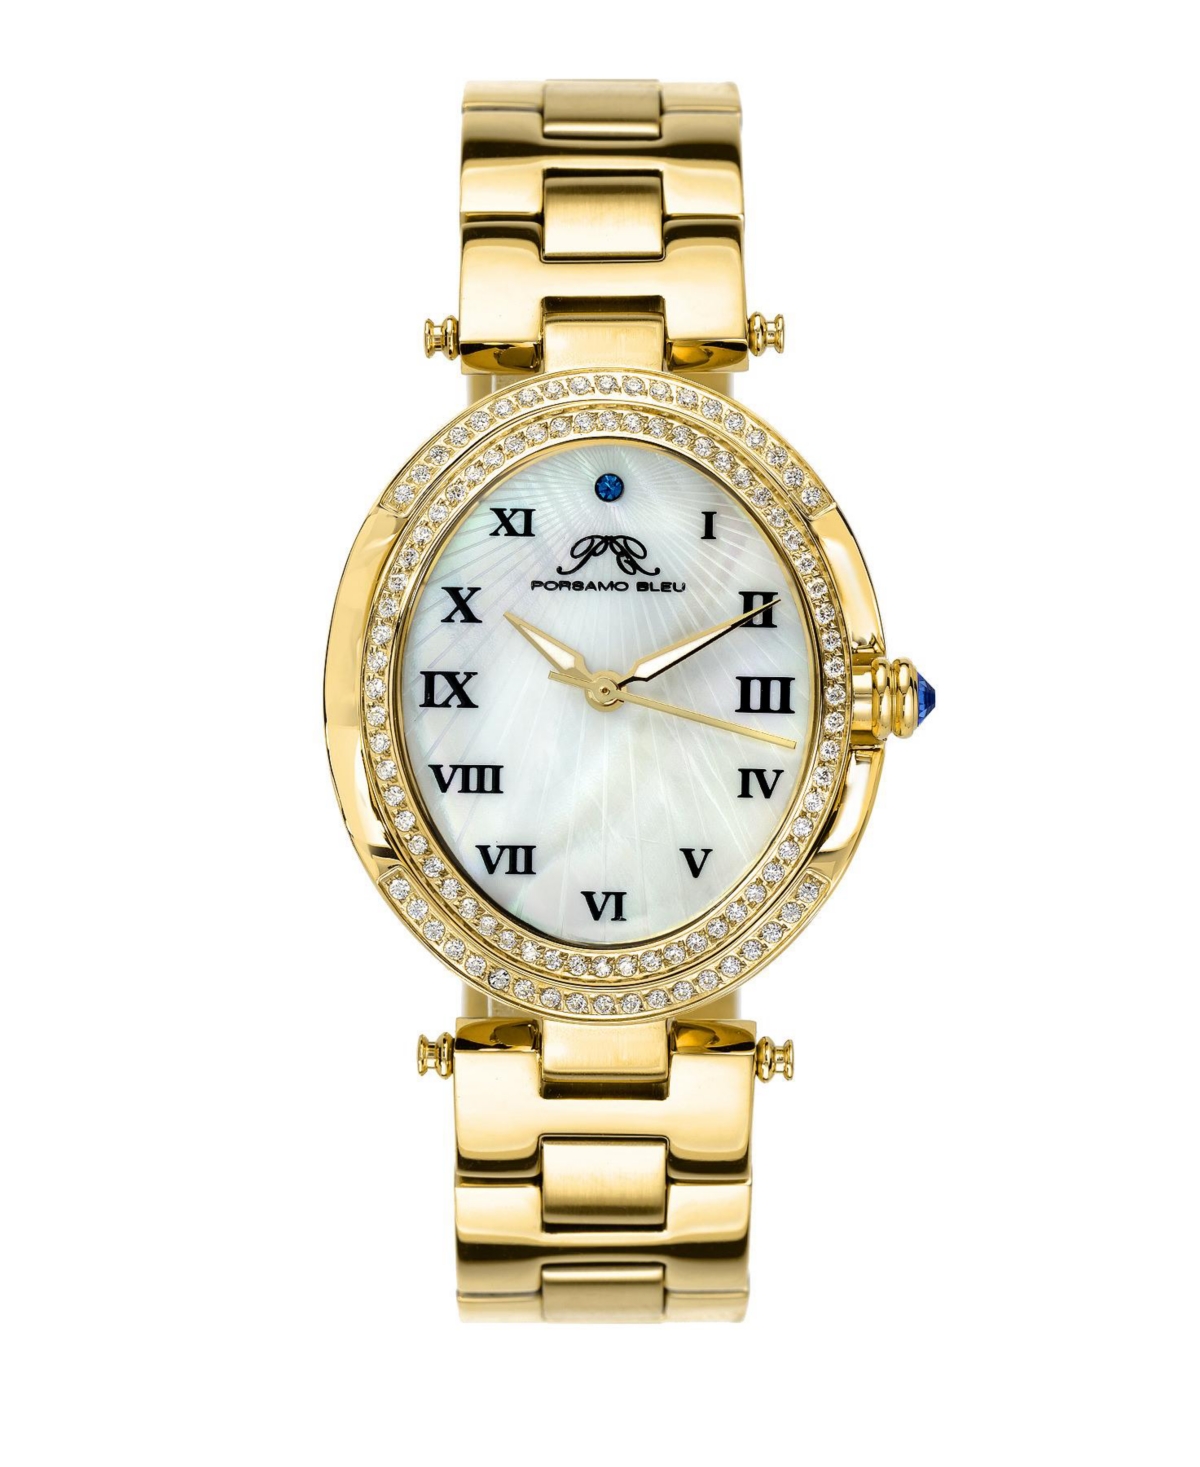 Women's South Sea Oval Crystal Stainless Steel Bracelet Watch 106BSSO - Gold